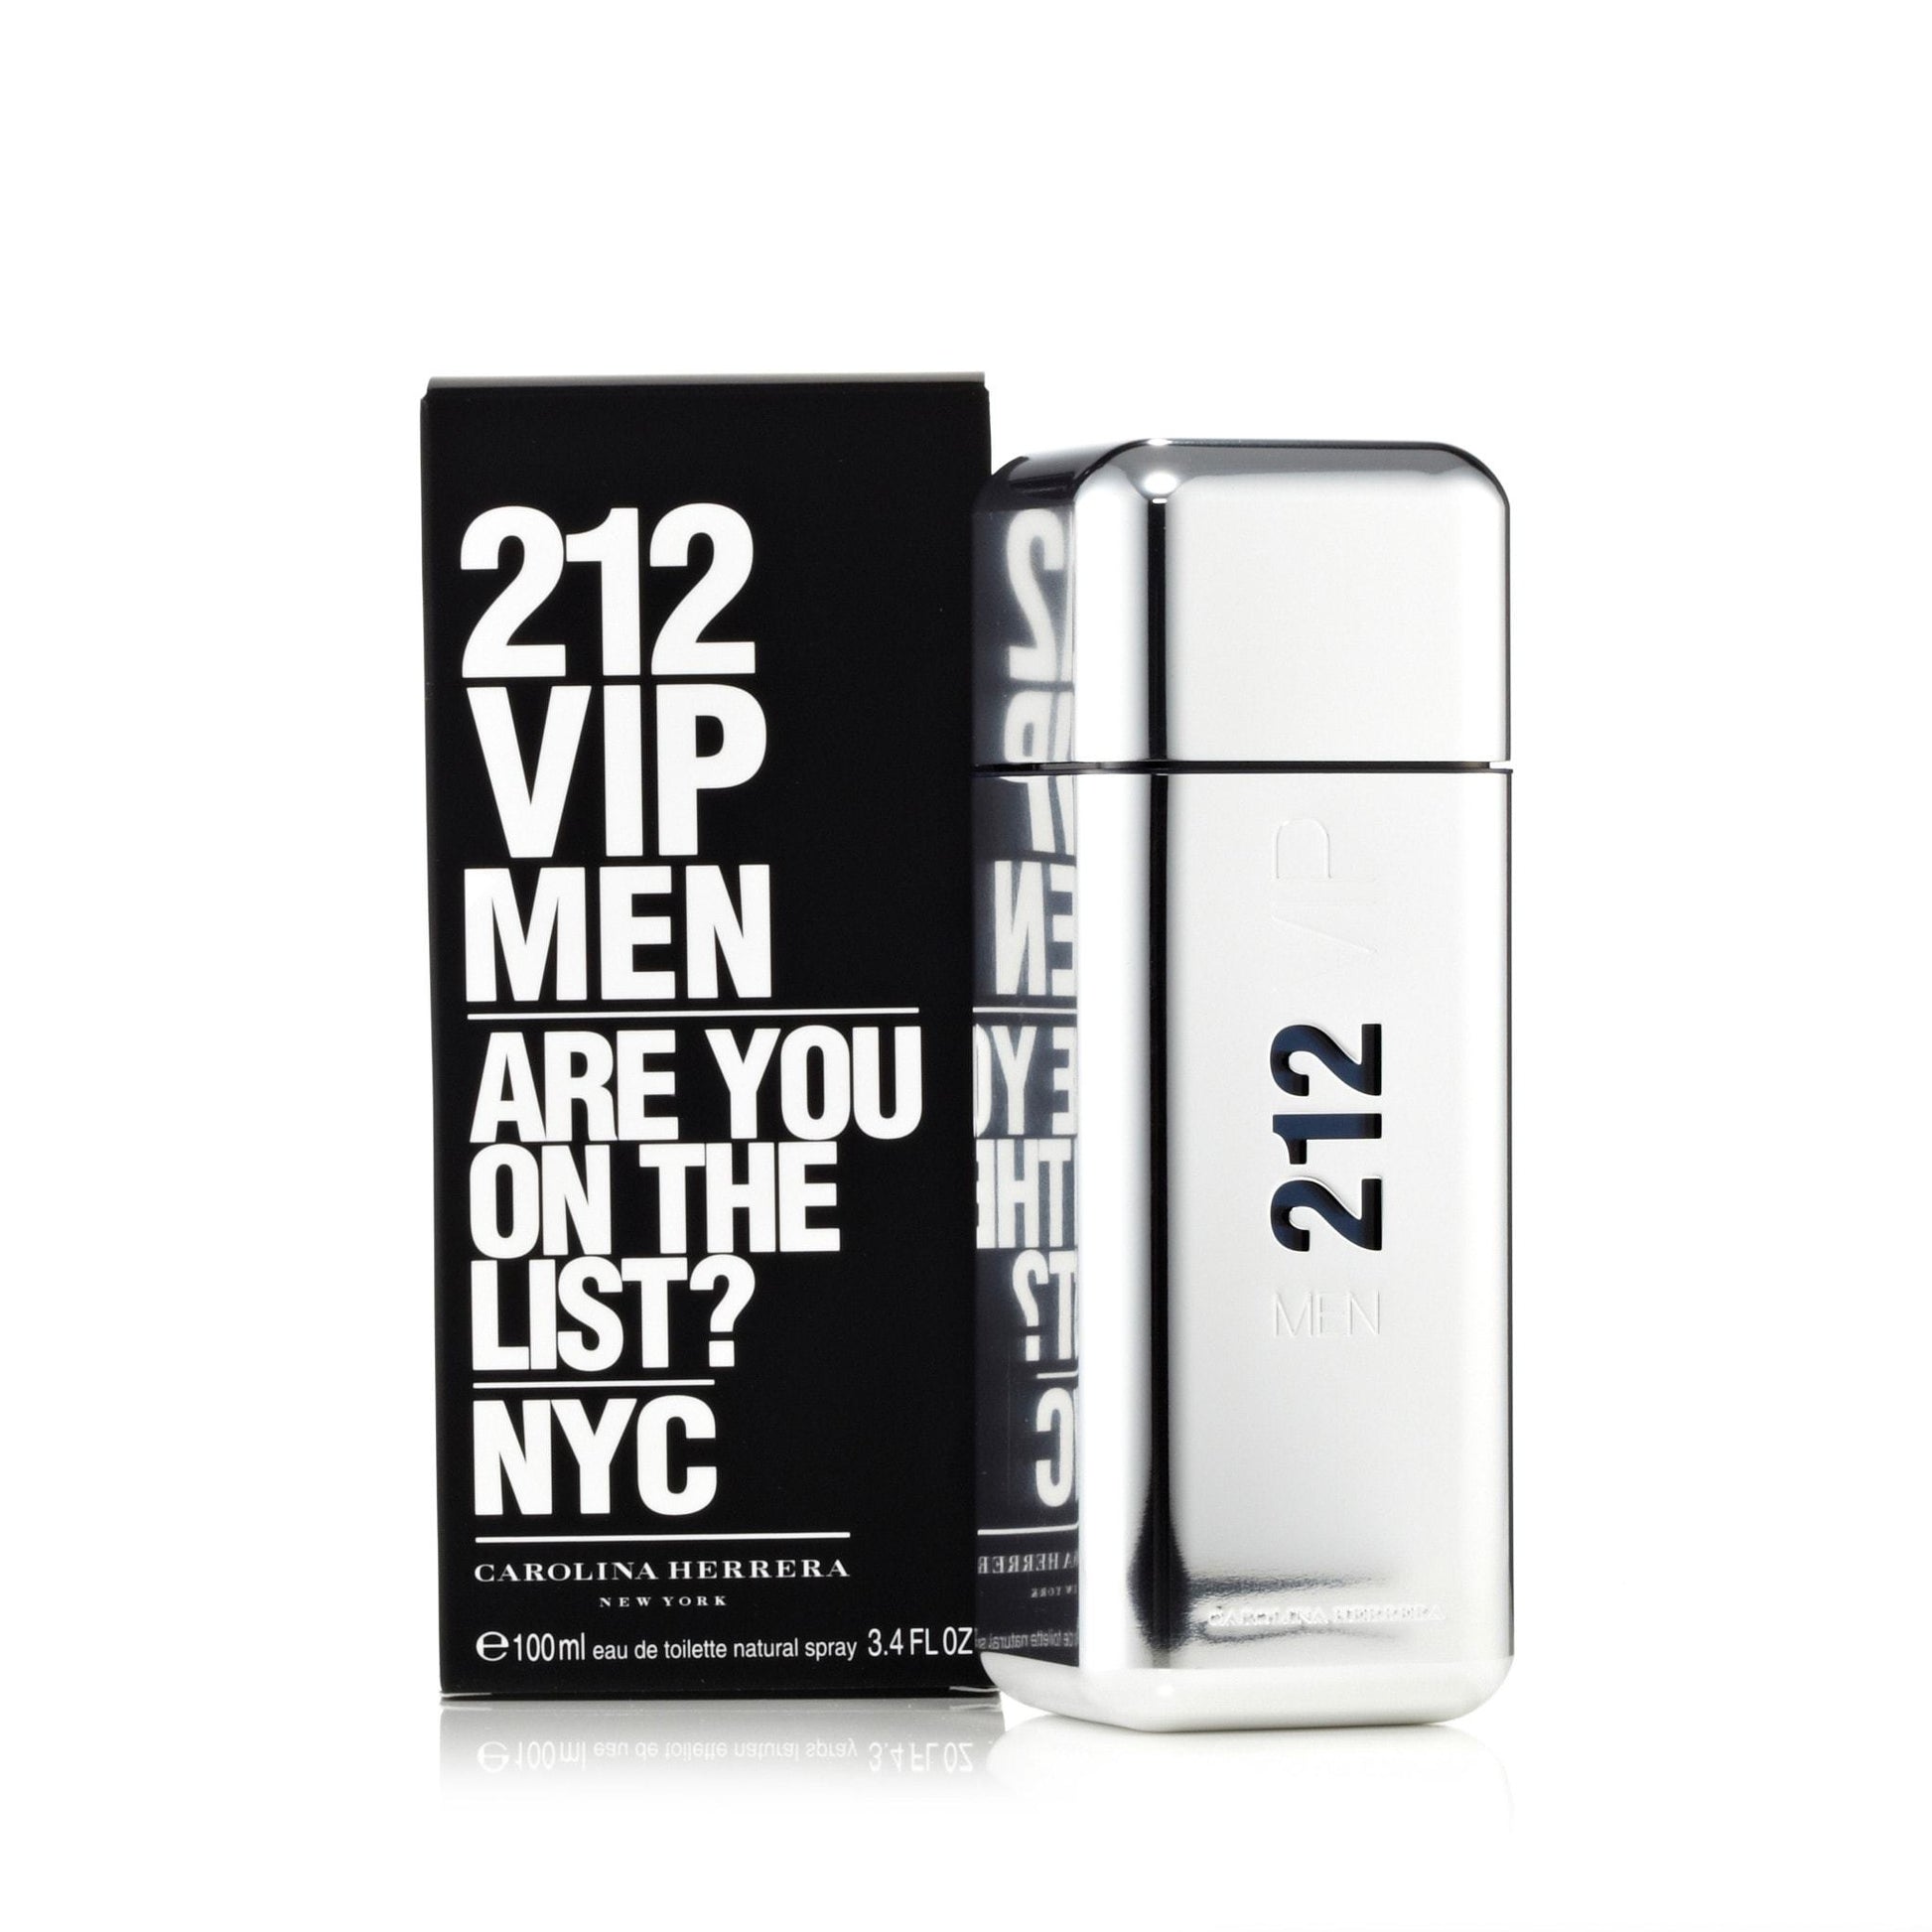 212 Vip Men Eau de Toilette Spray for Men by Carolina Herrera, Product image 1